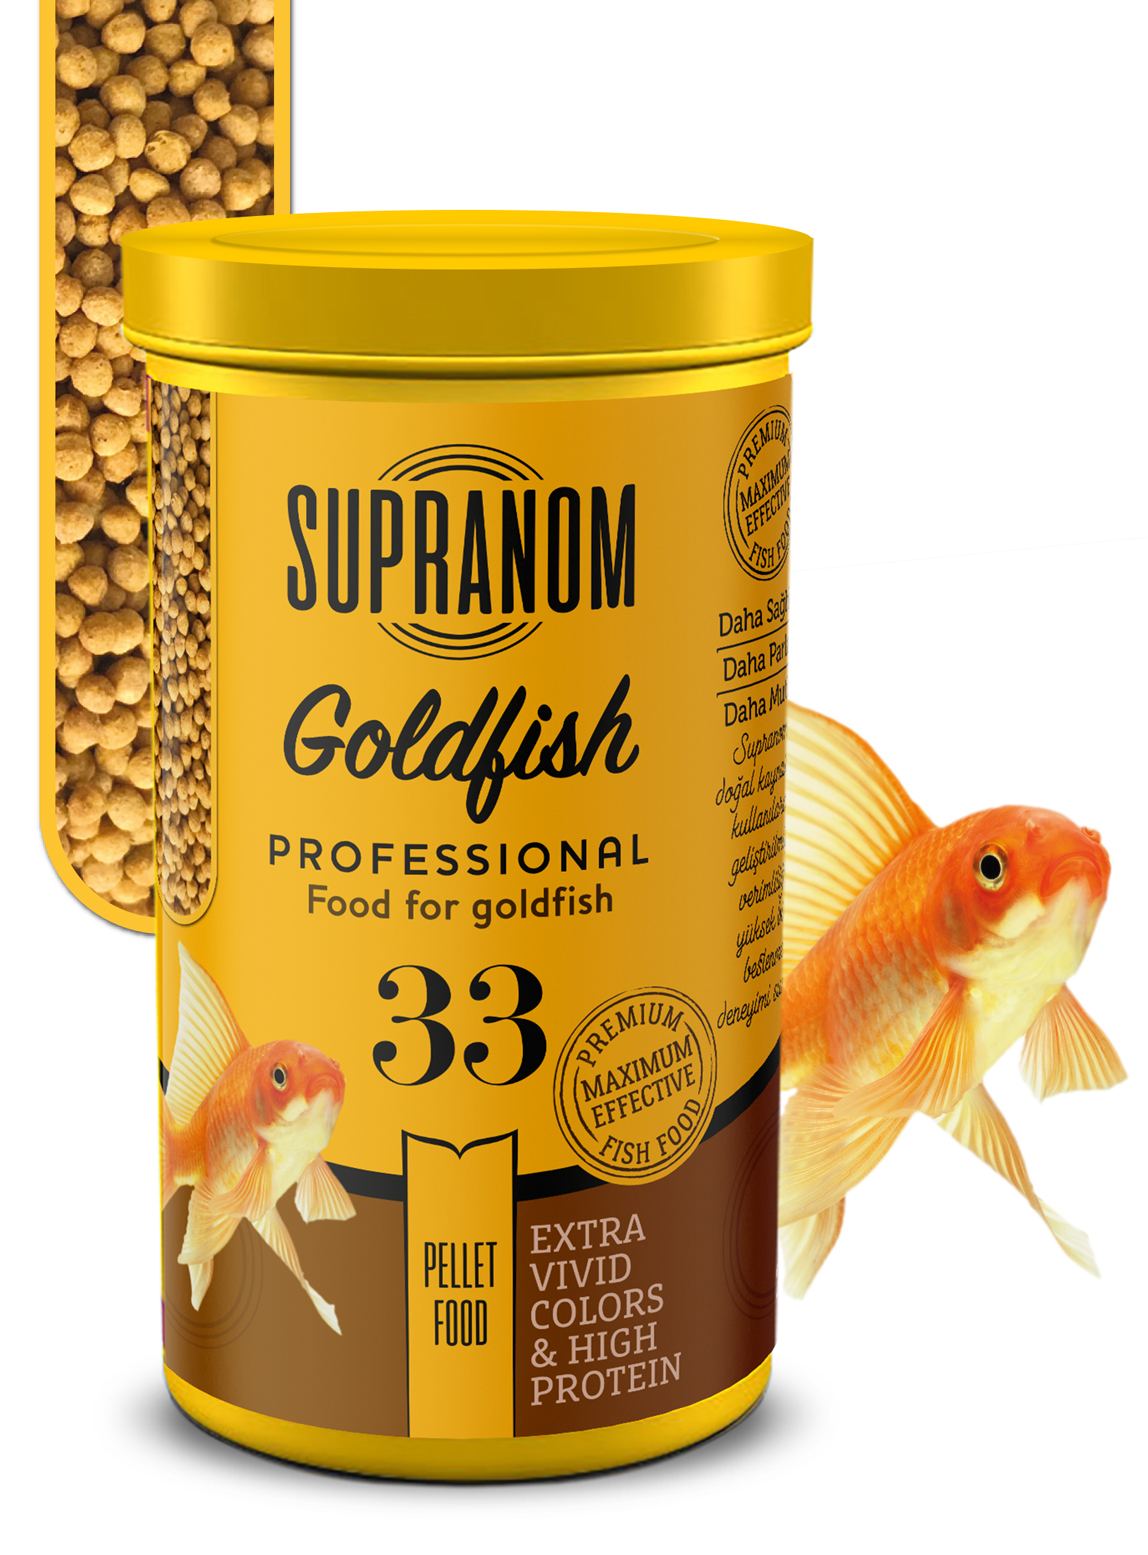 Supranom japon balık yemi goldfish pellet food 250ml (33)-1